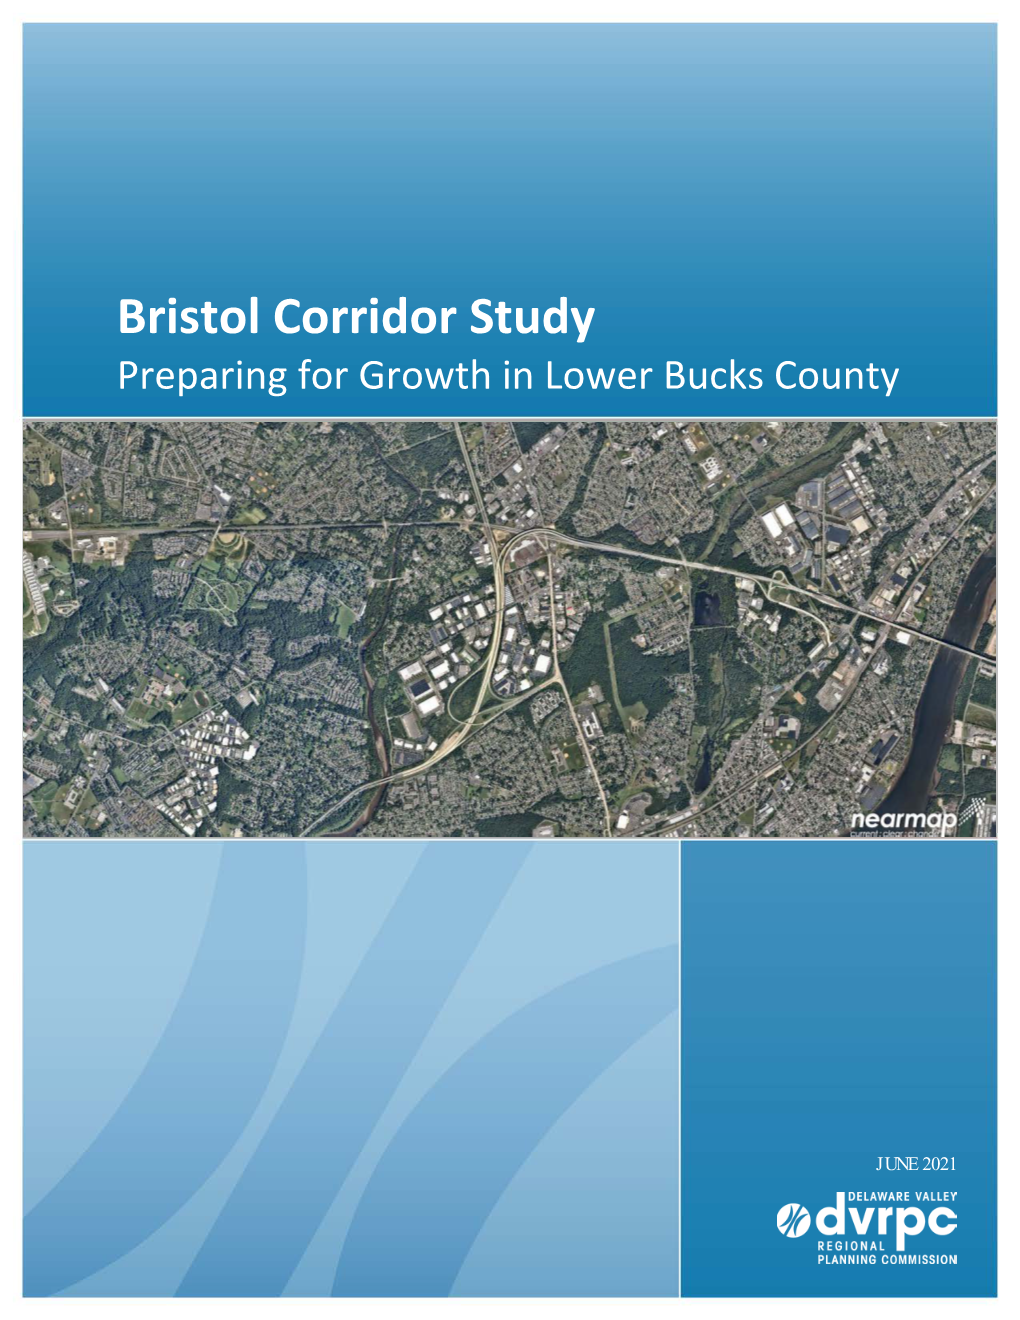 Bristol Corridor Study Preparing for Growth in Lower Bucks County